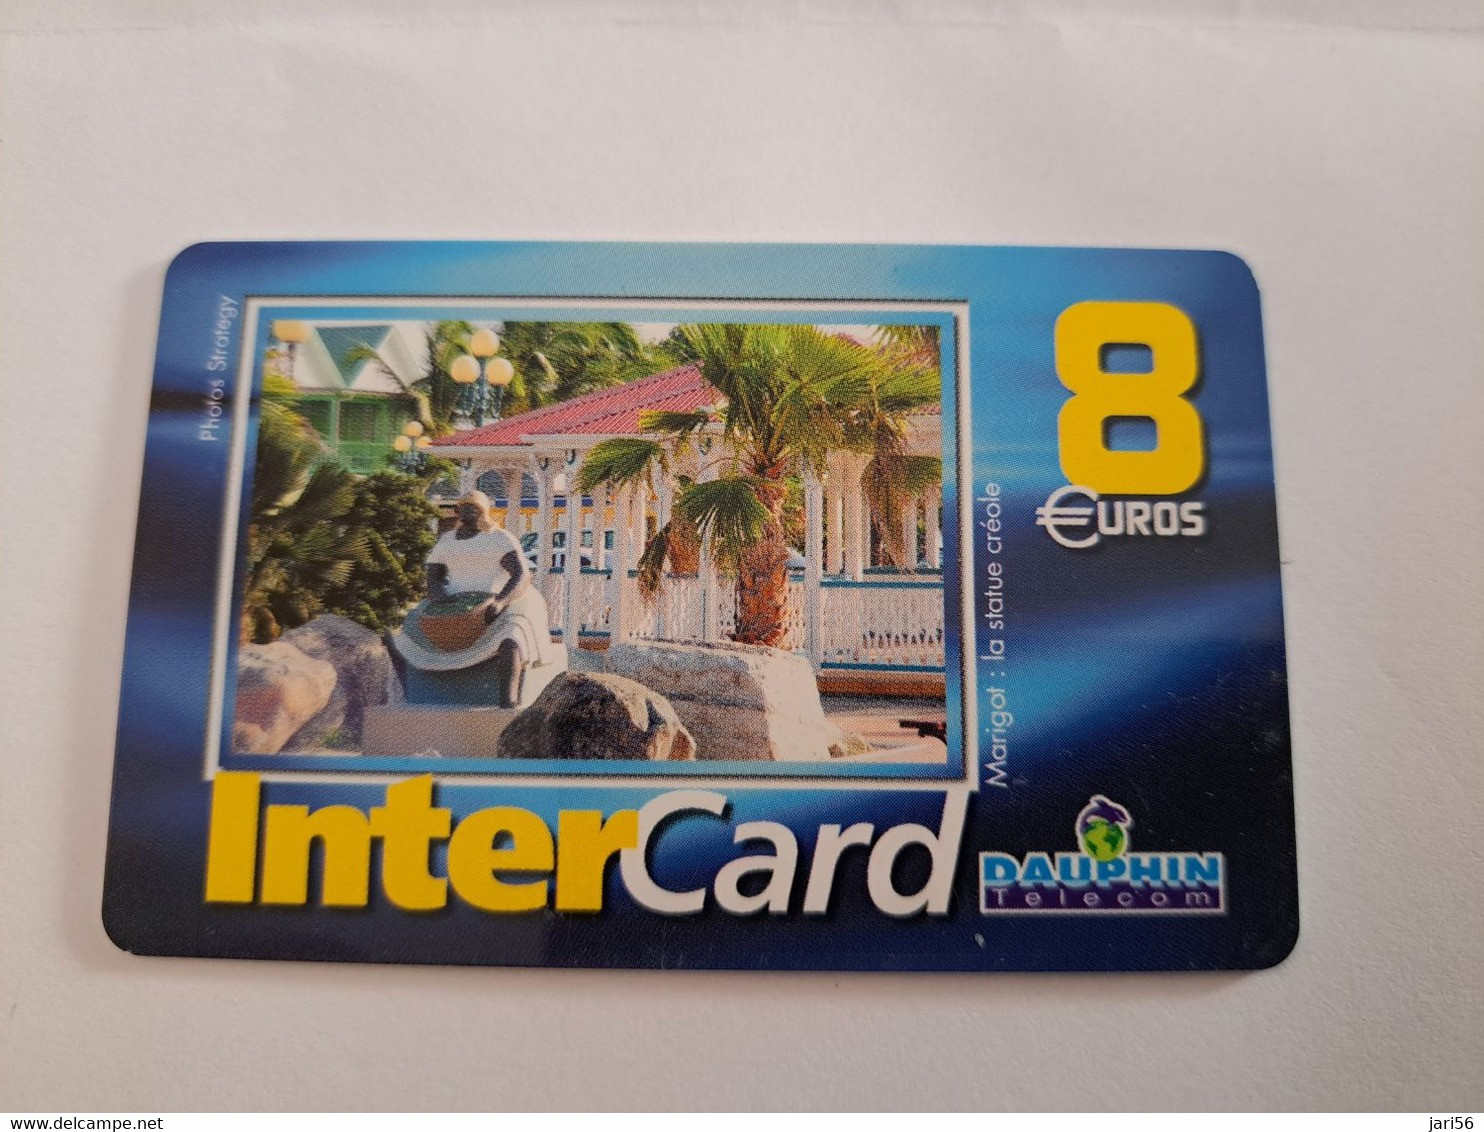 ST MARTIN / INTERCARD  8 EURO  MARIGOT LA STATUE CREOLE      NO 010   Fine Used Card    ** 10897** - Antilles (French)